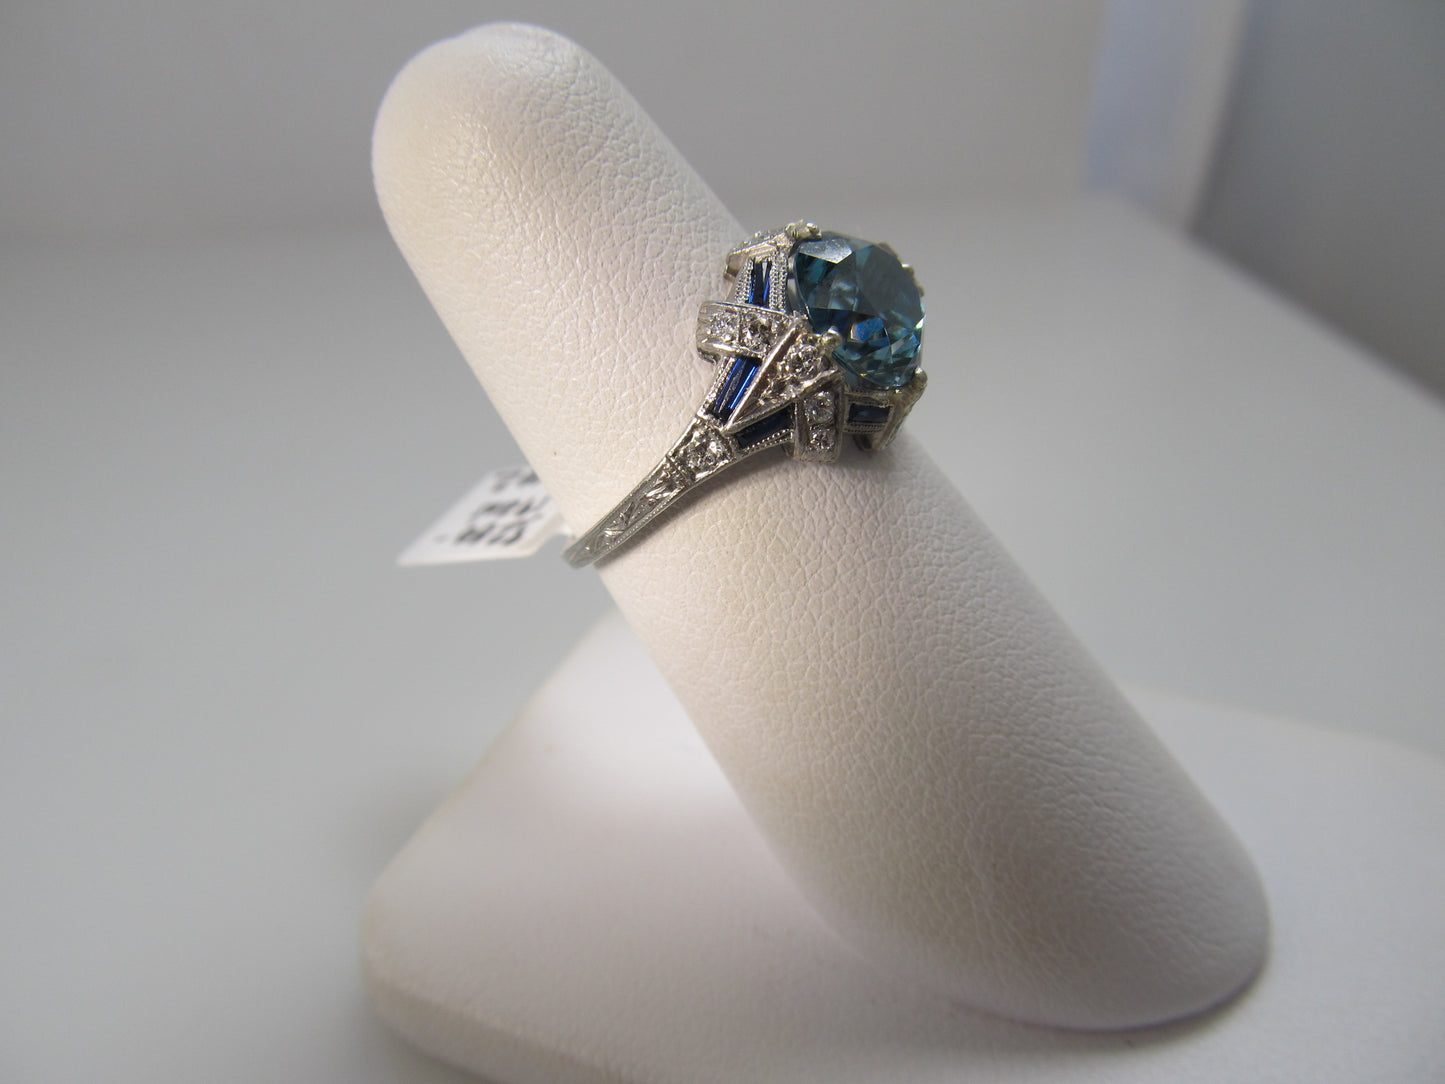 Antique platinum ring with a 2.50ct blue zircon